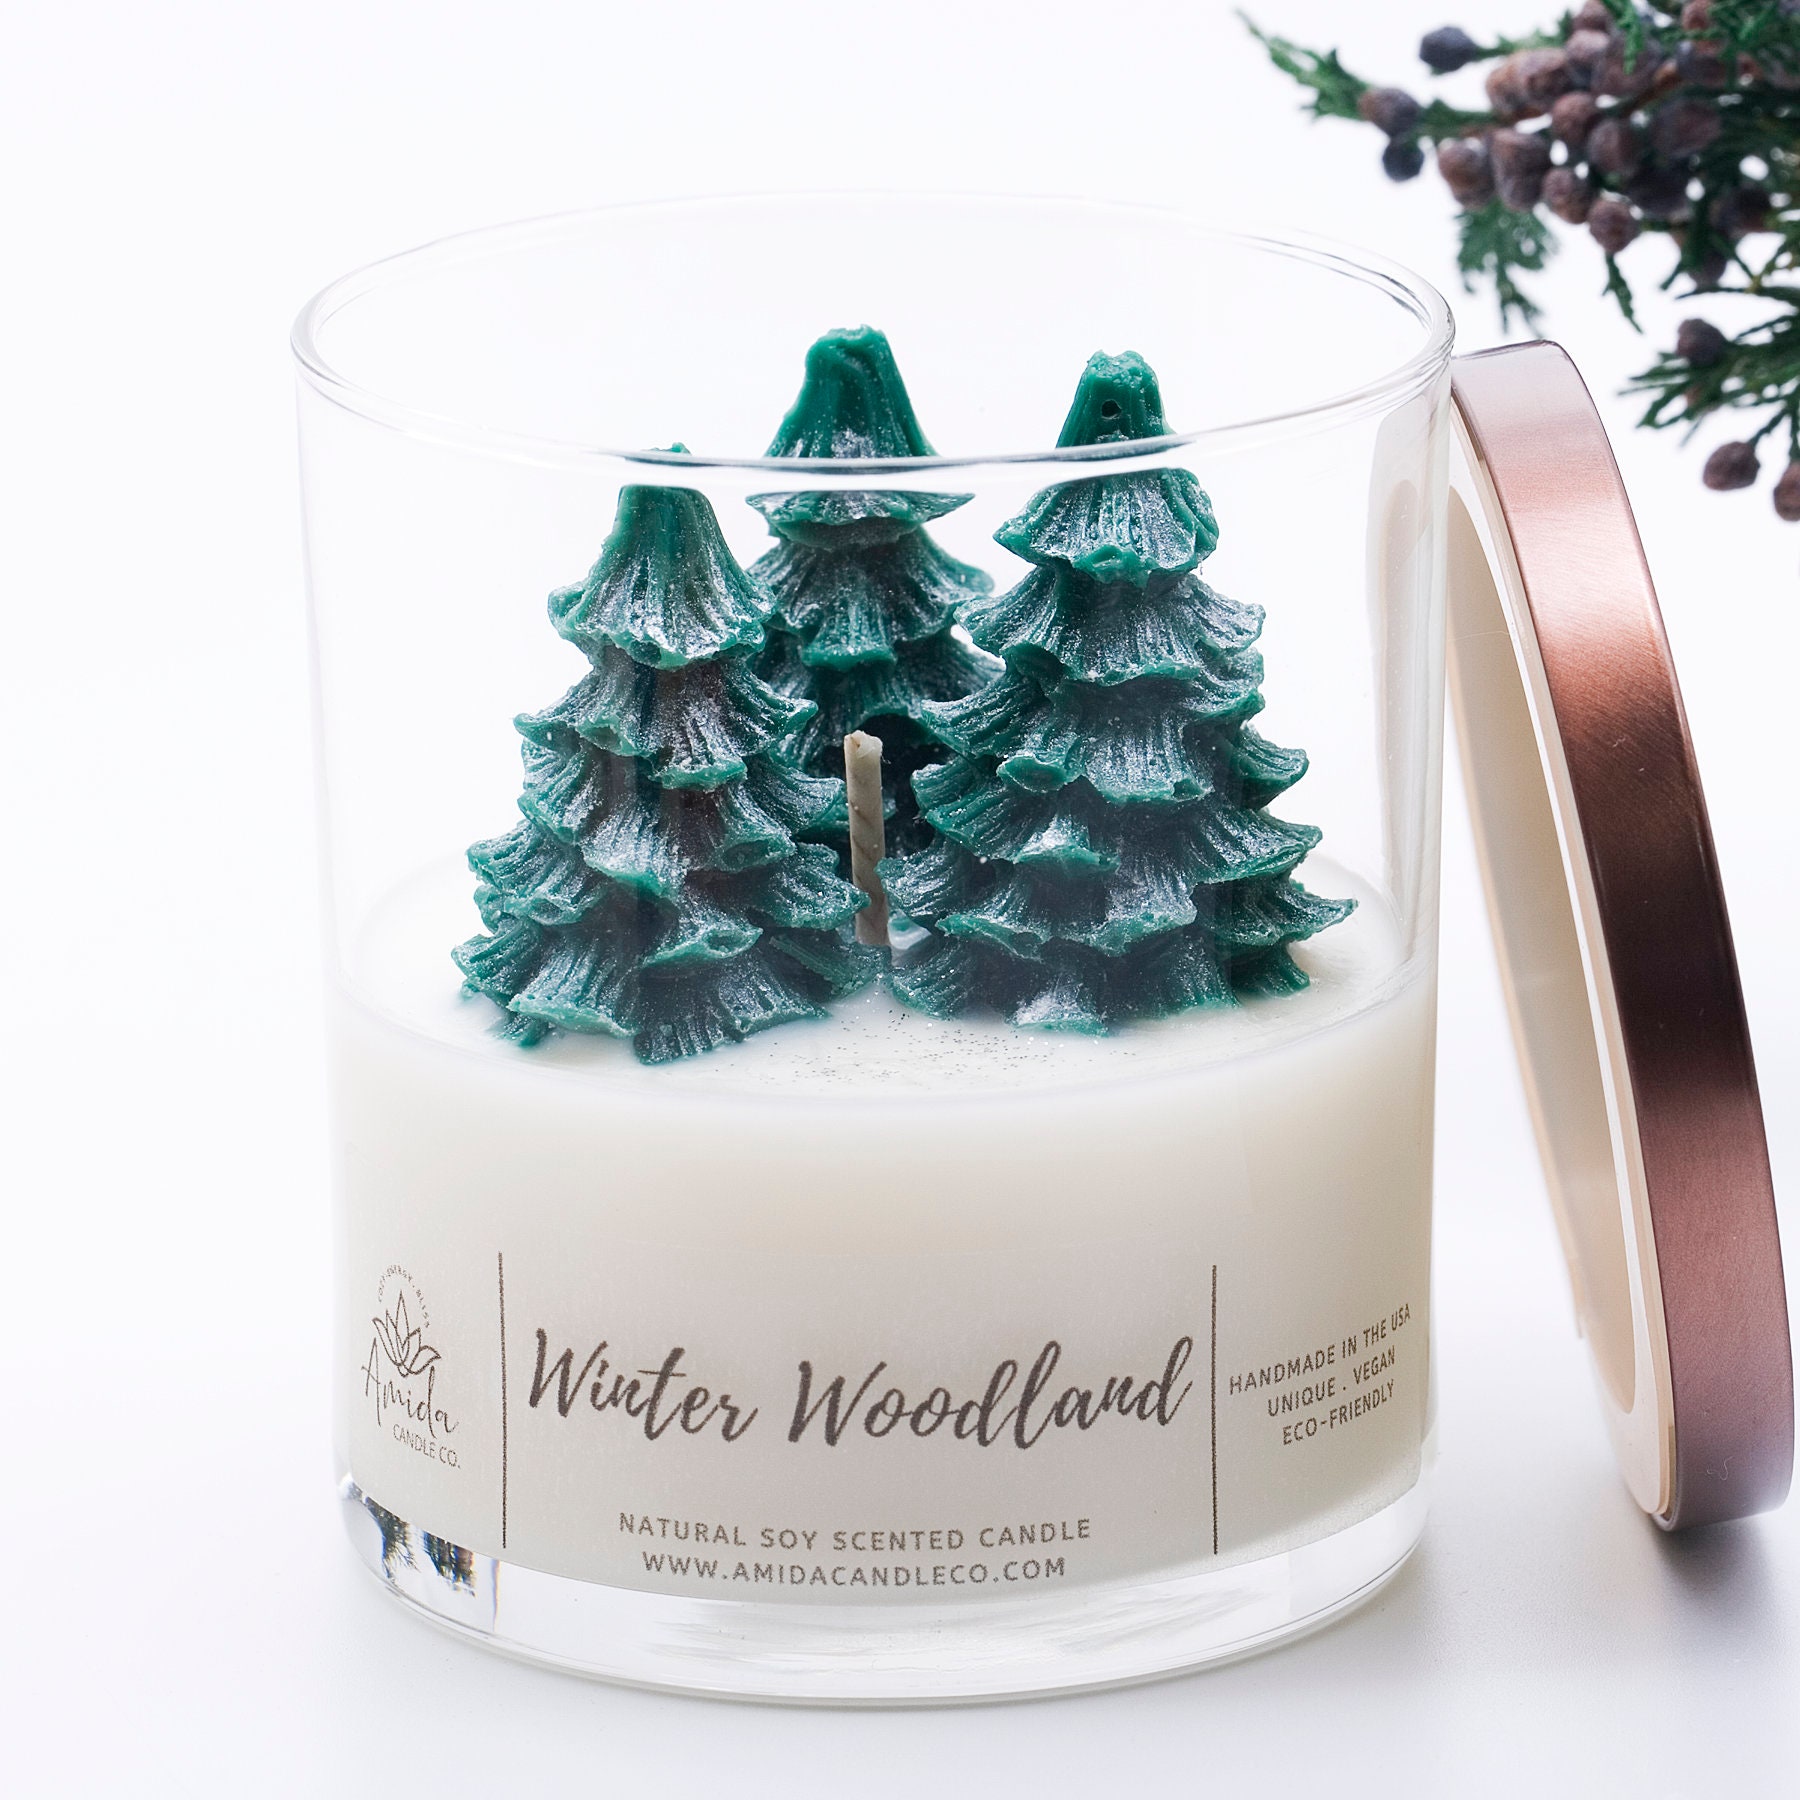 WoodWick's Evergreen Candle Smells Like a Christmas Tree